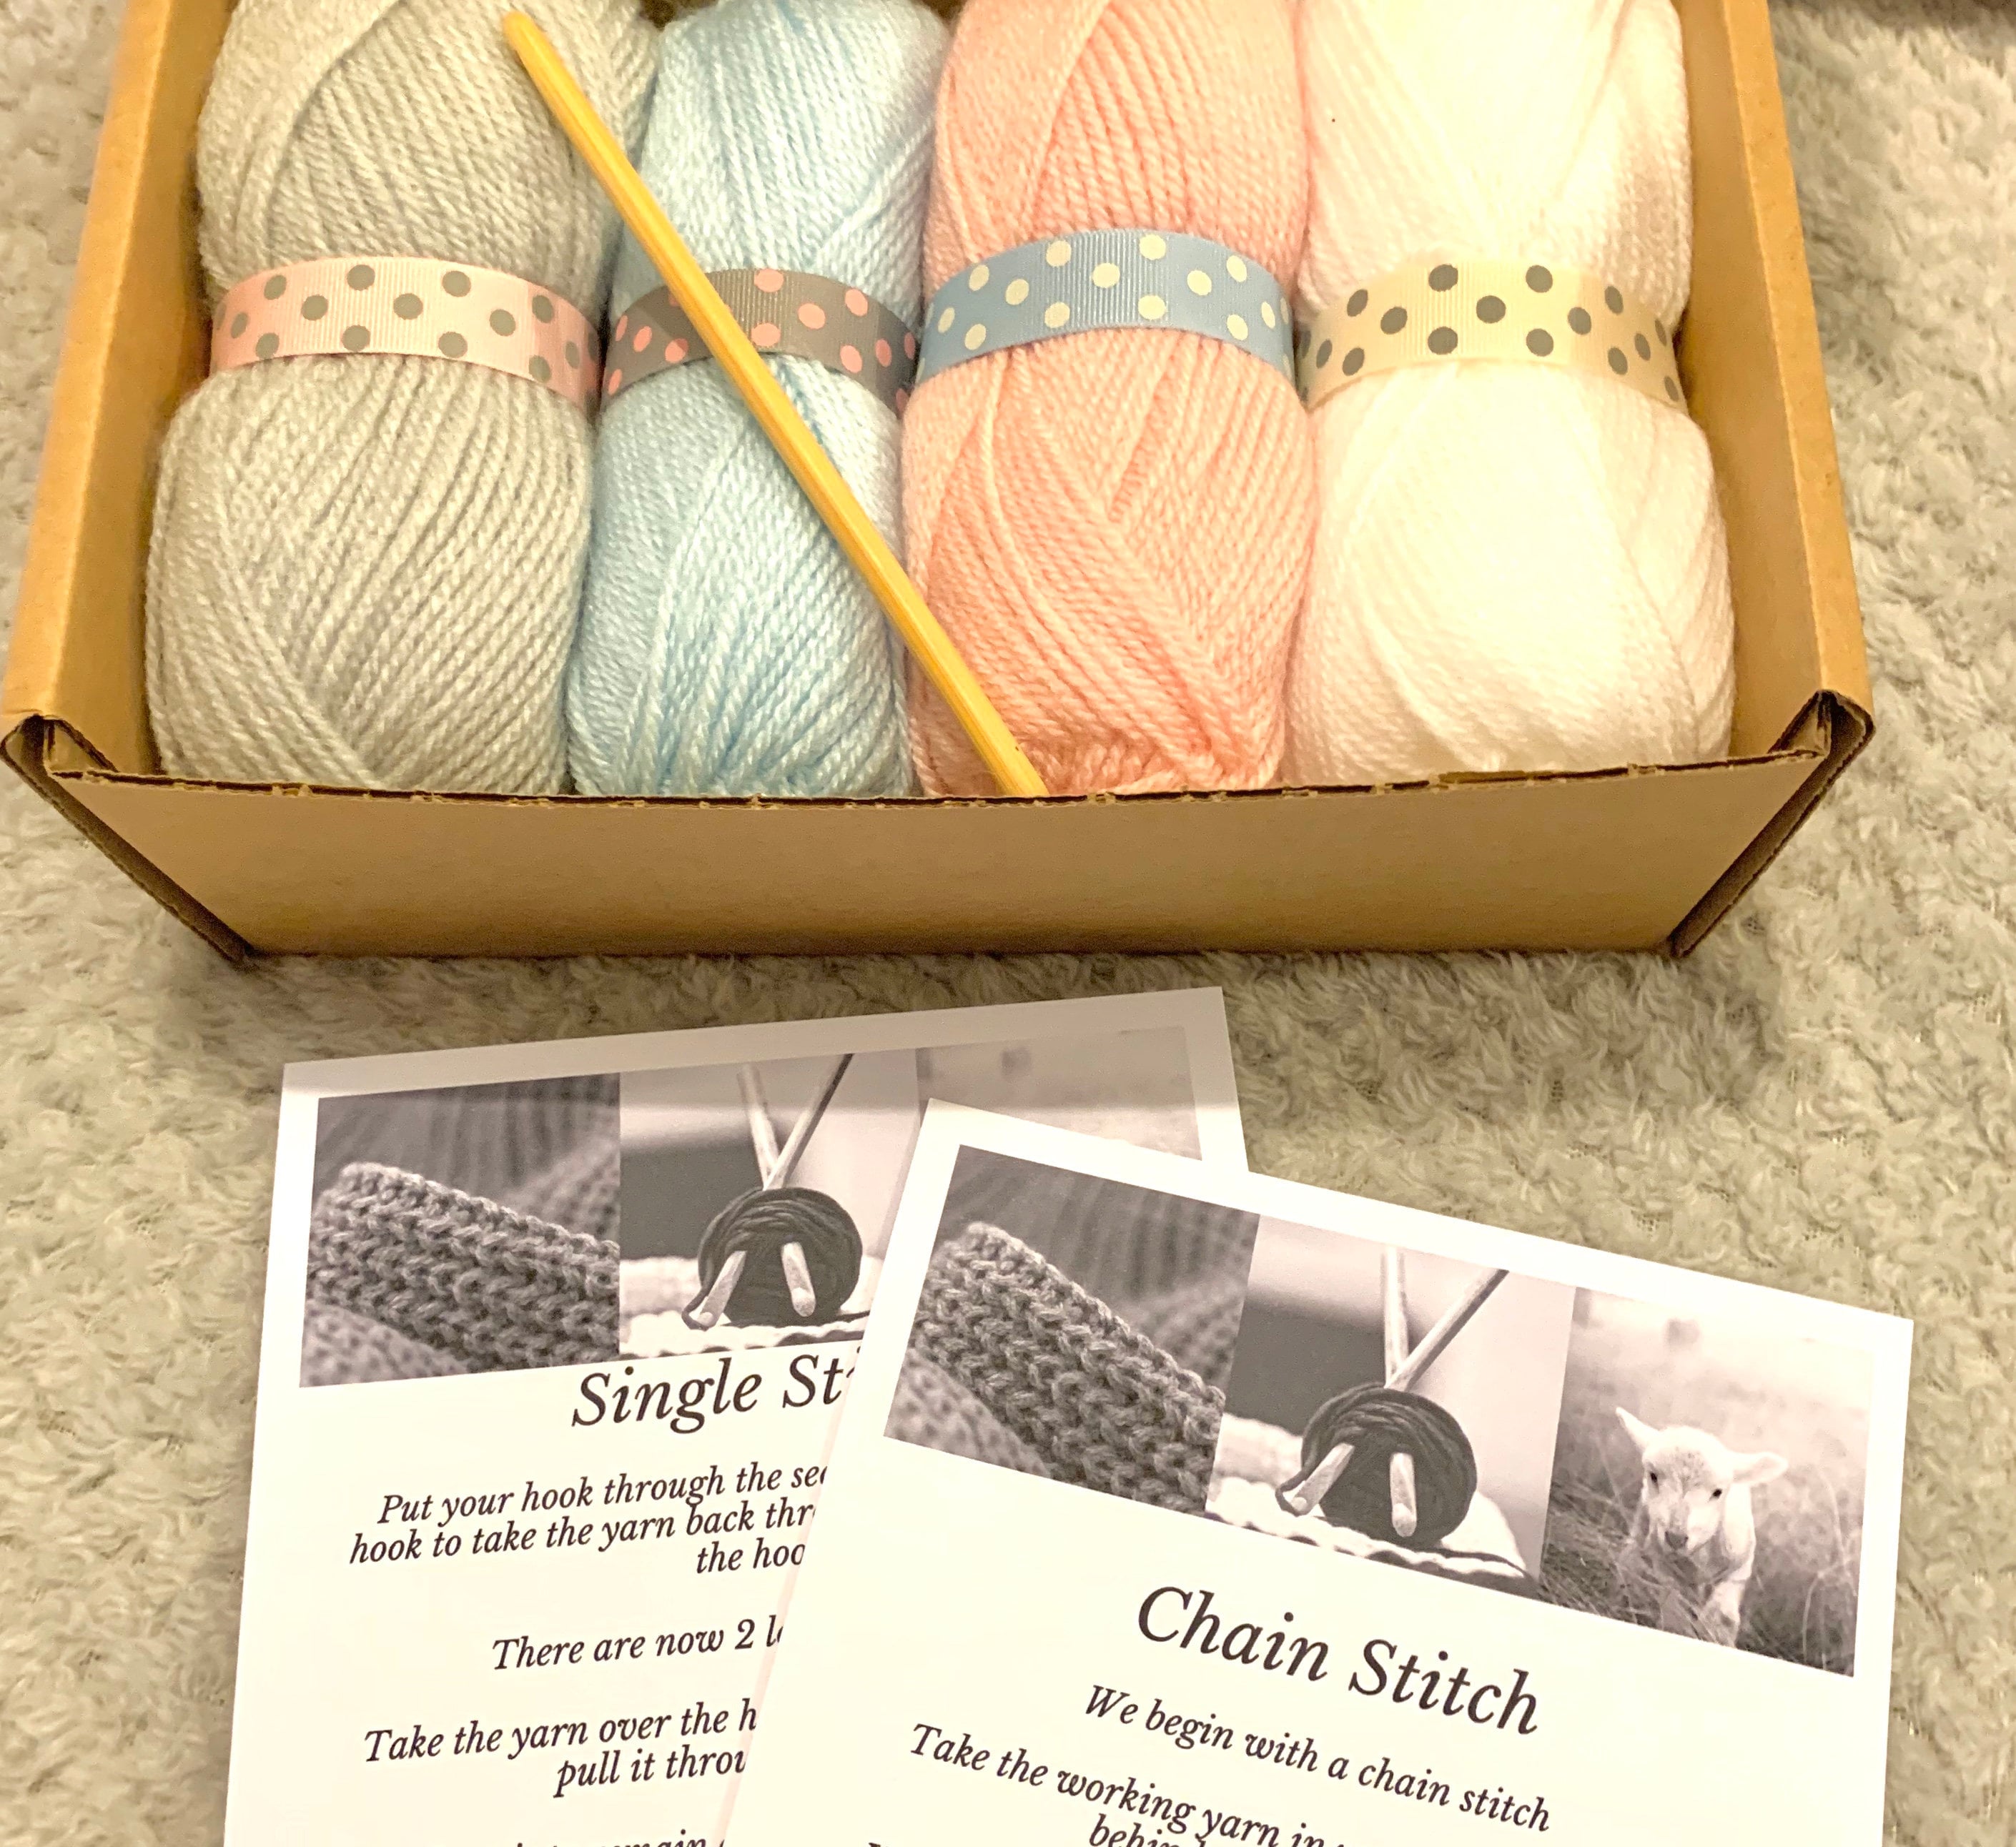 Cadeya Crochet Kit for Beginners, Crocheting Bags Kits with Step